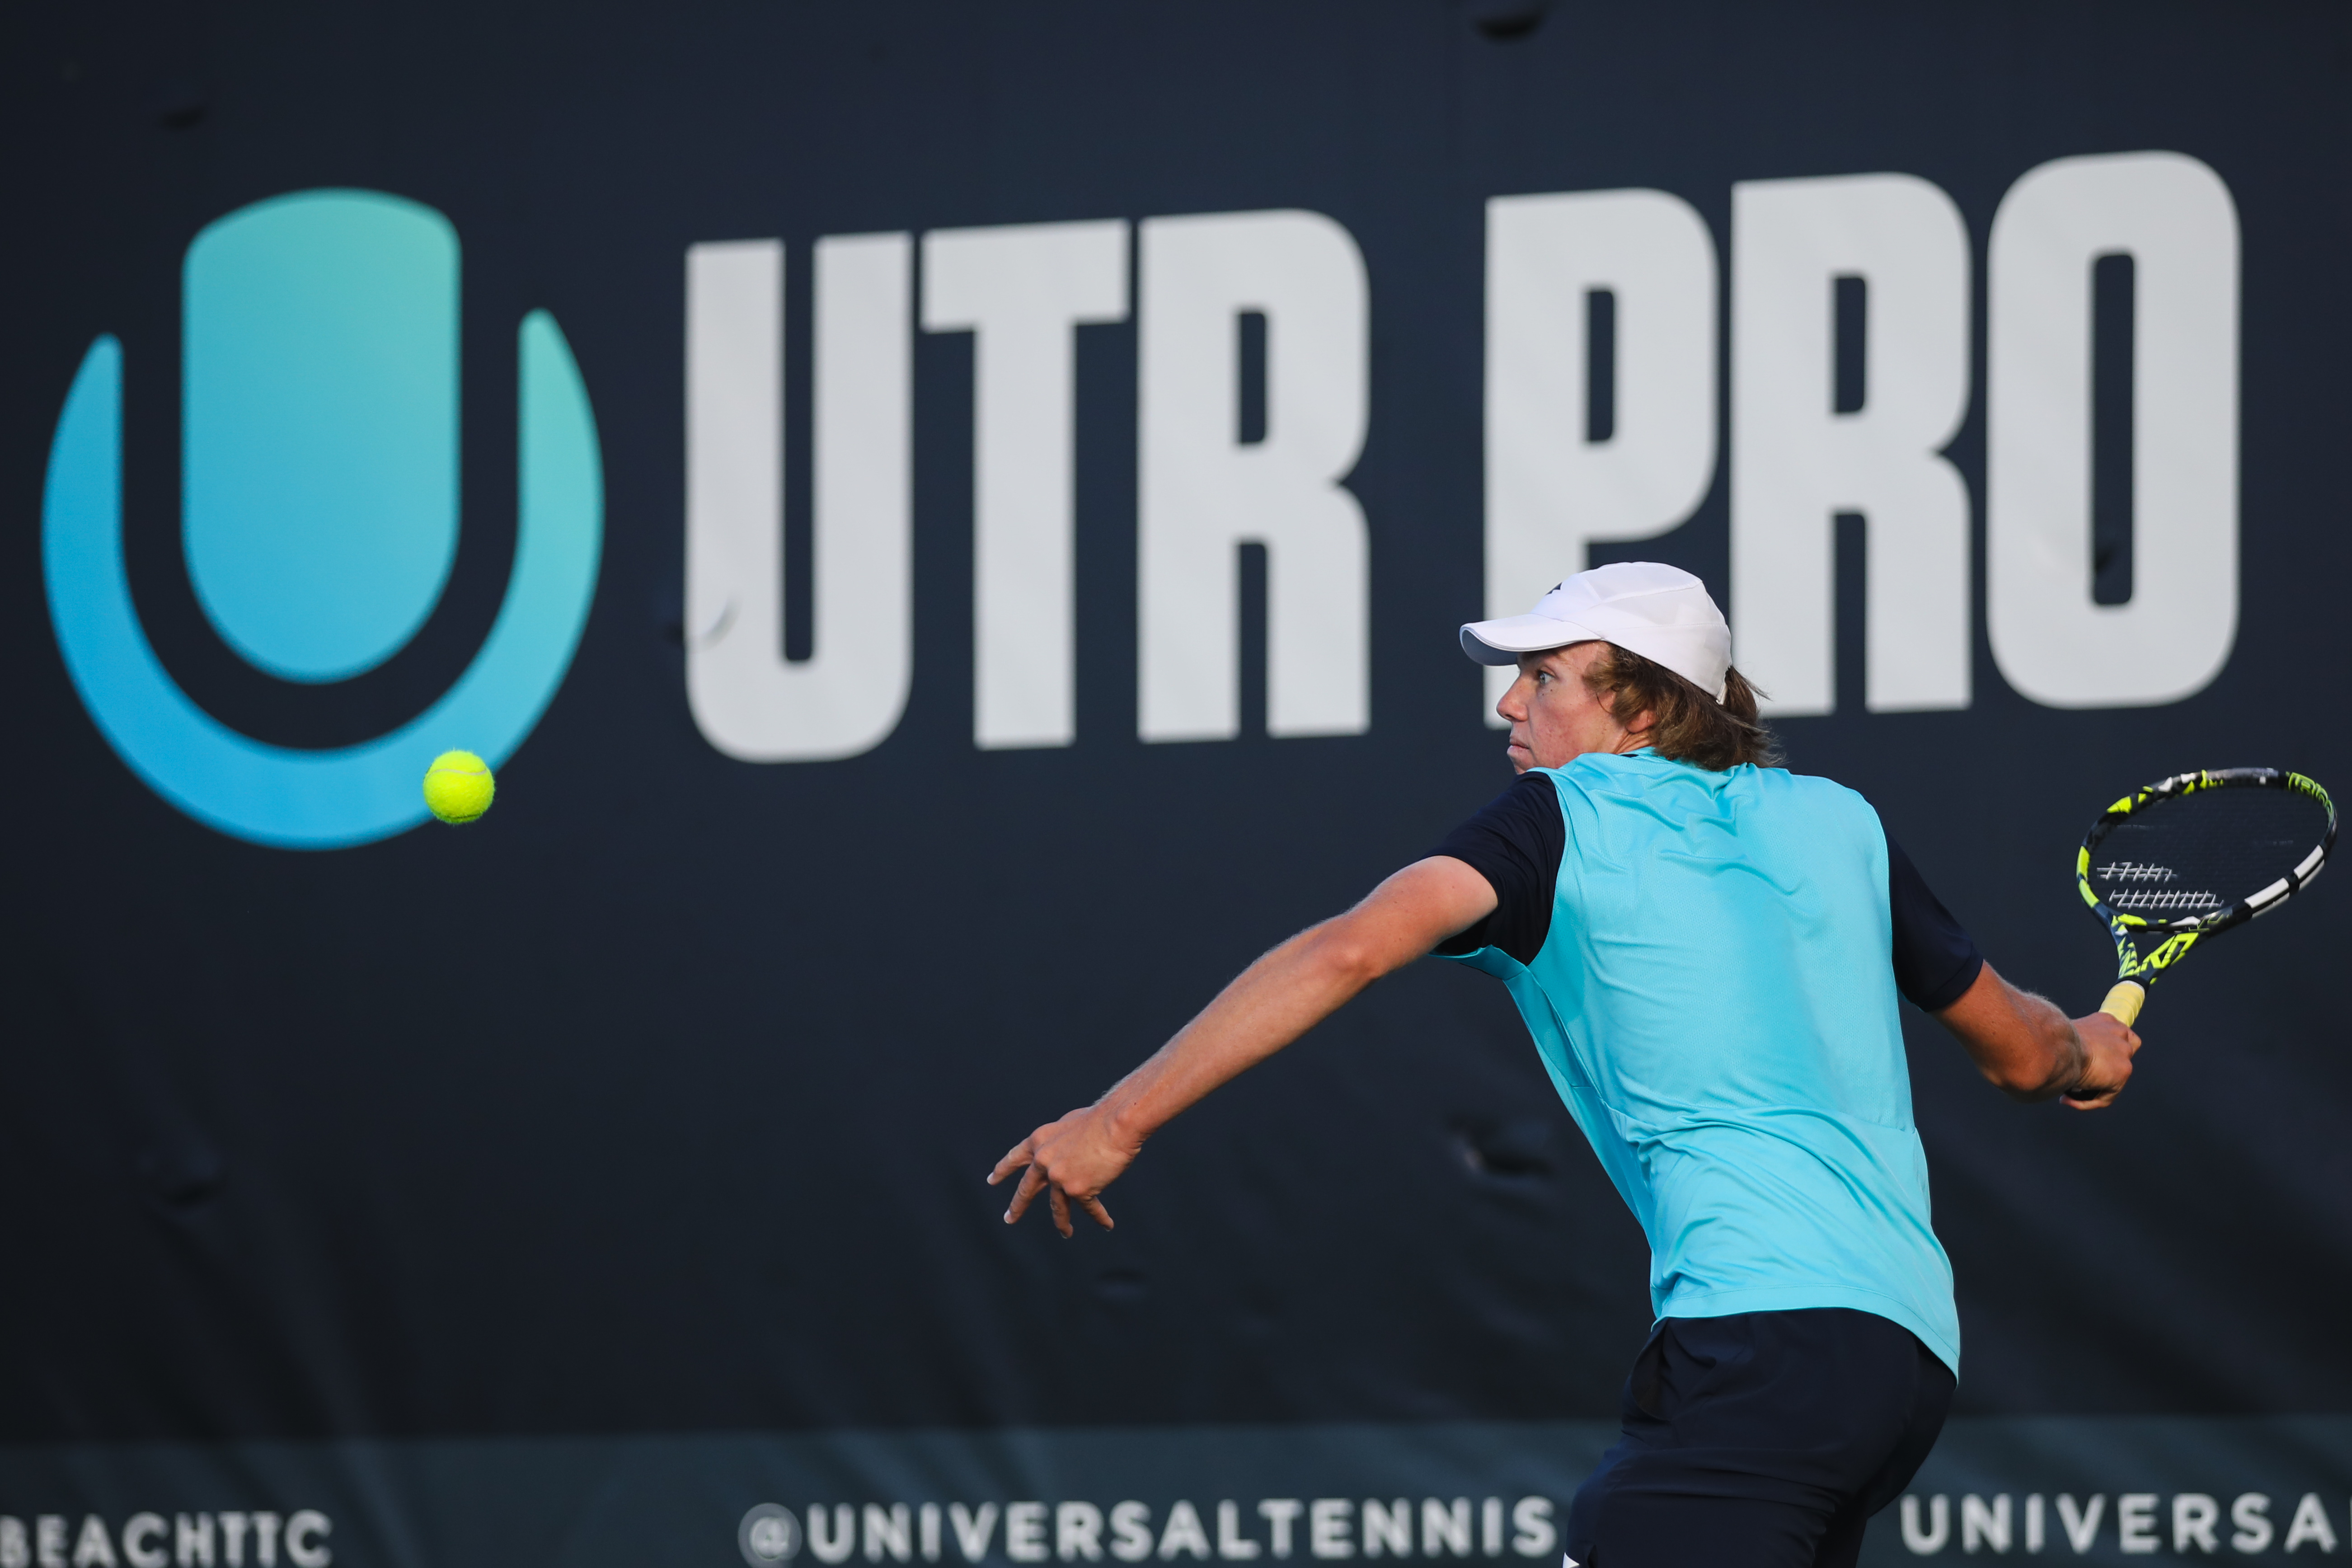 Universal Tennis’ UTR Pro Tennis Tour Launches on Prime Video